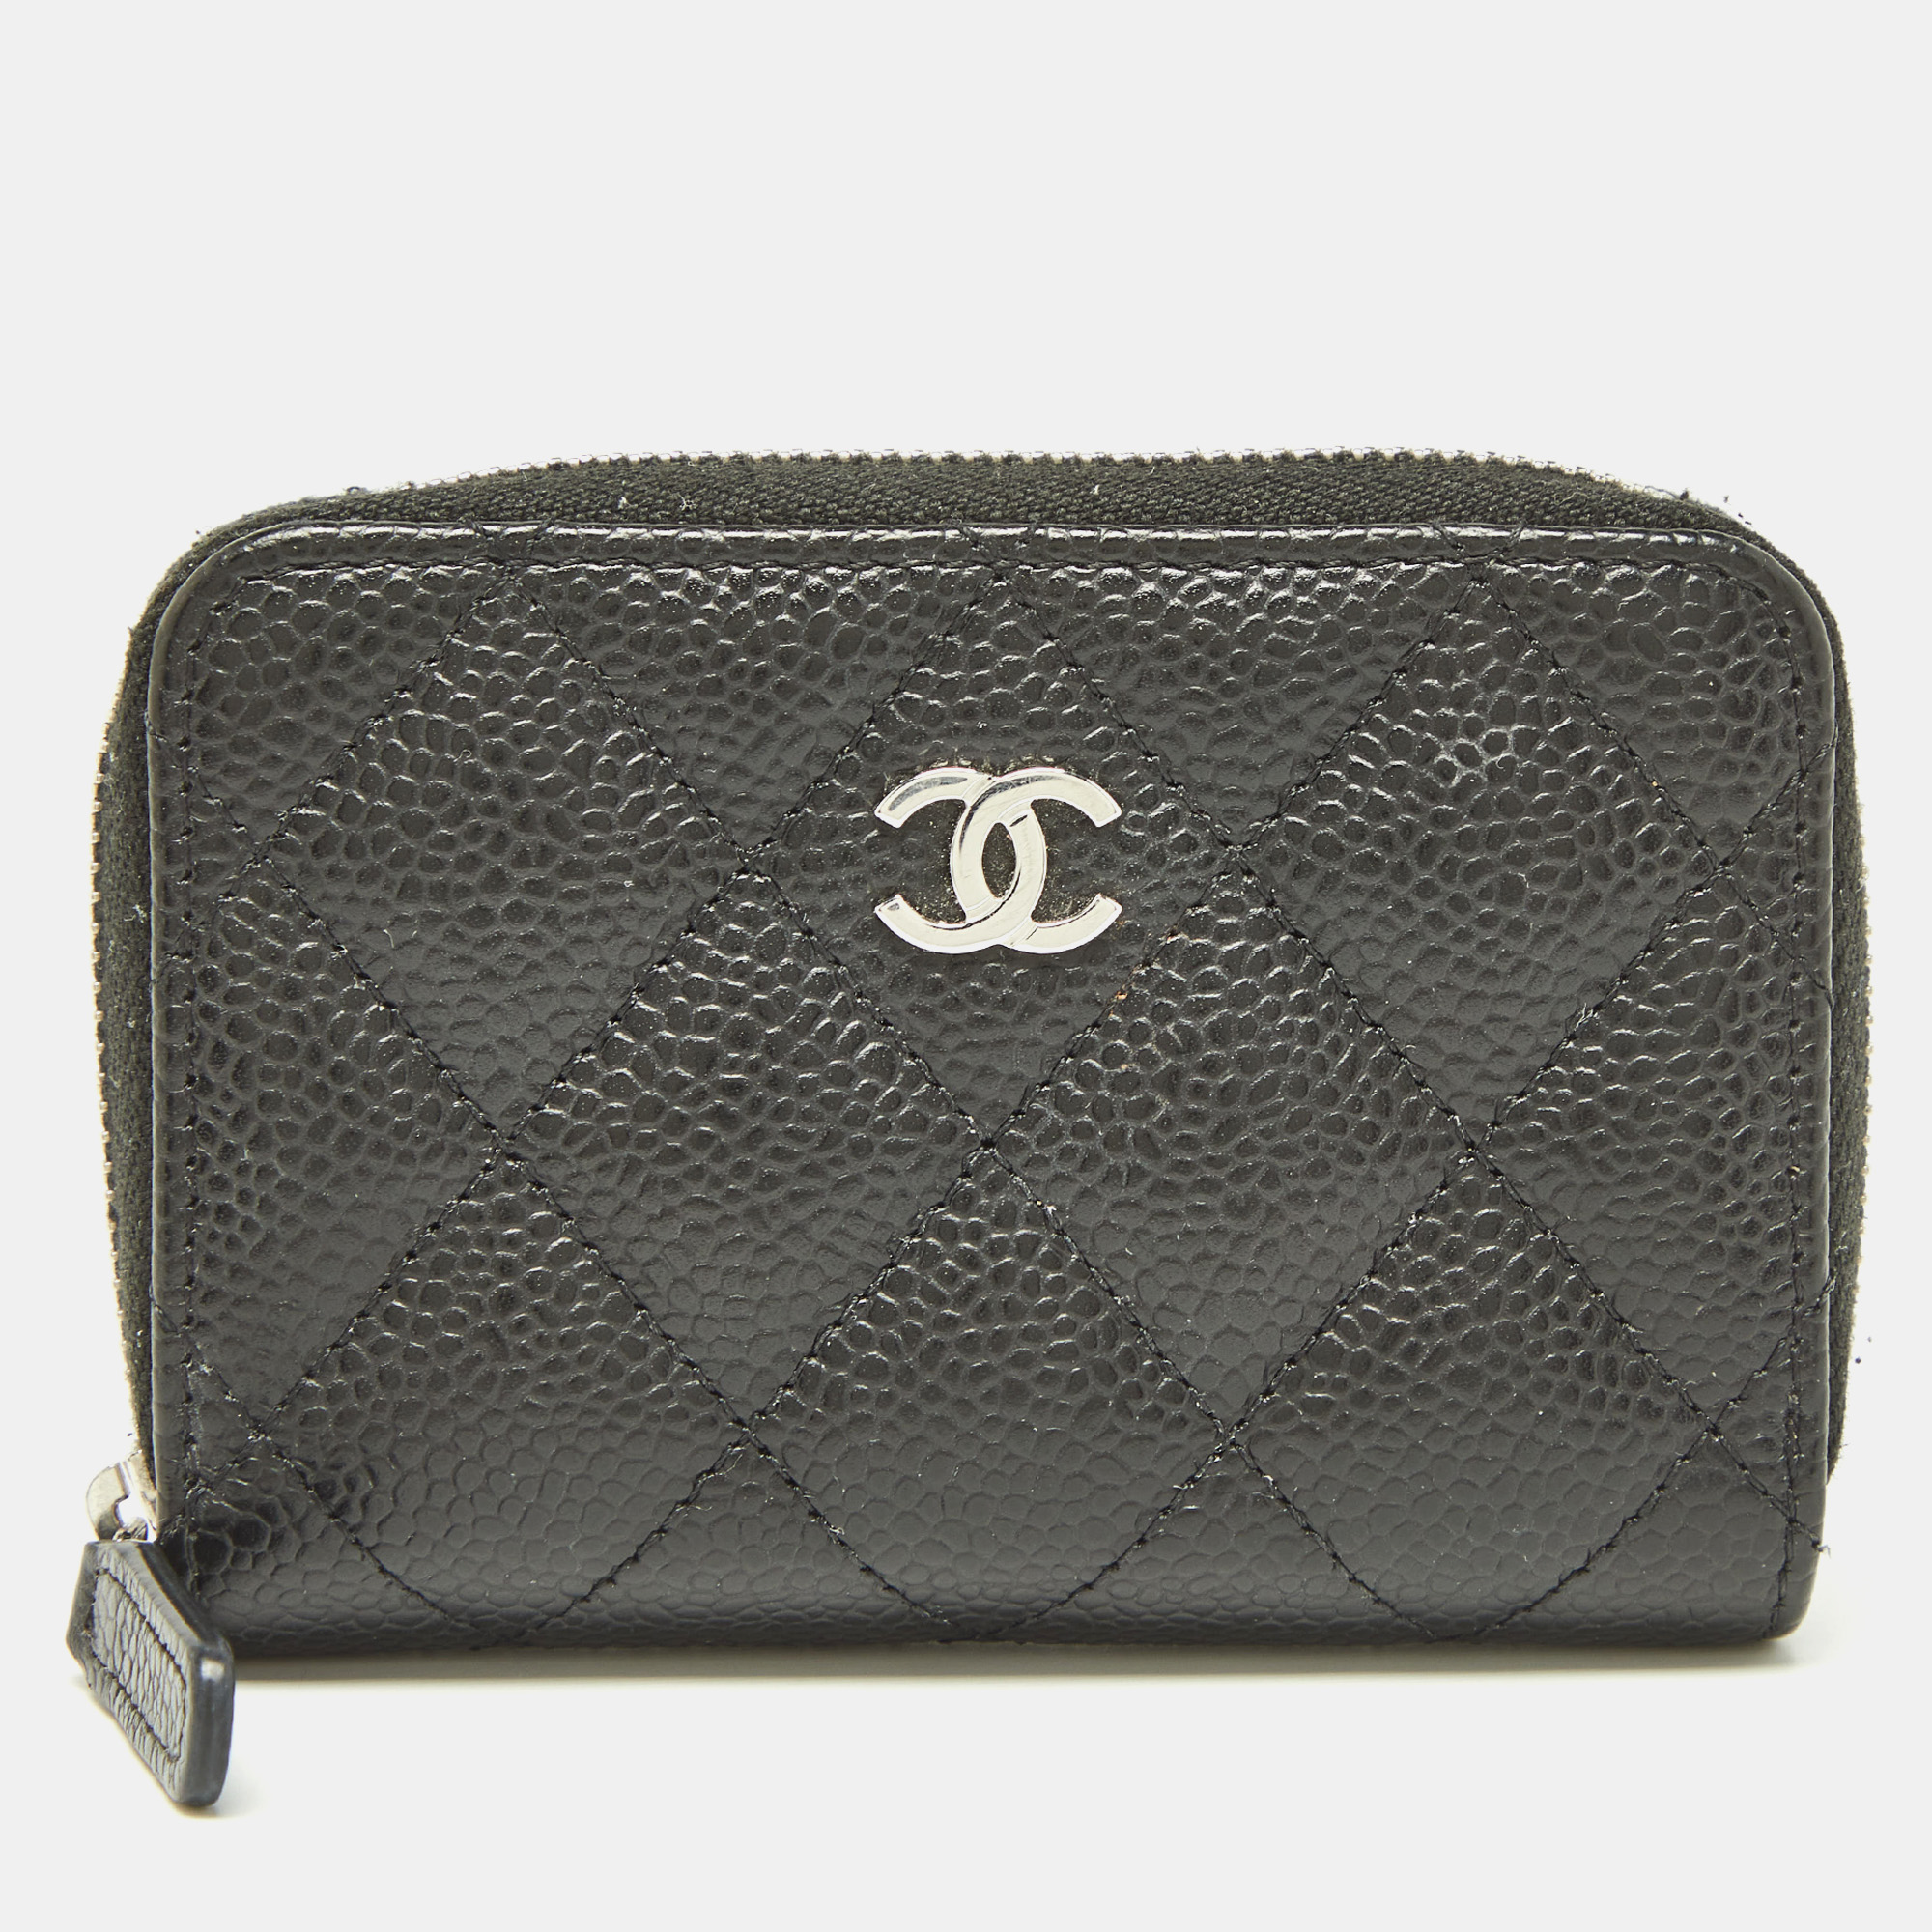 Chanel black caviar leather classic zipped coin purse